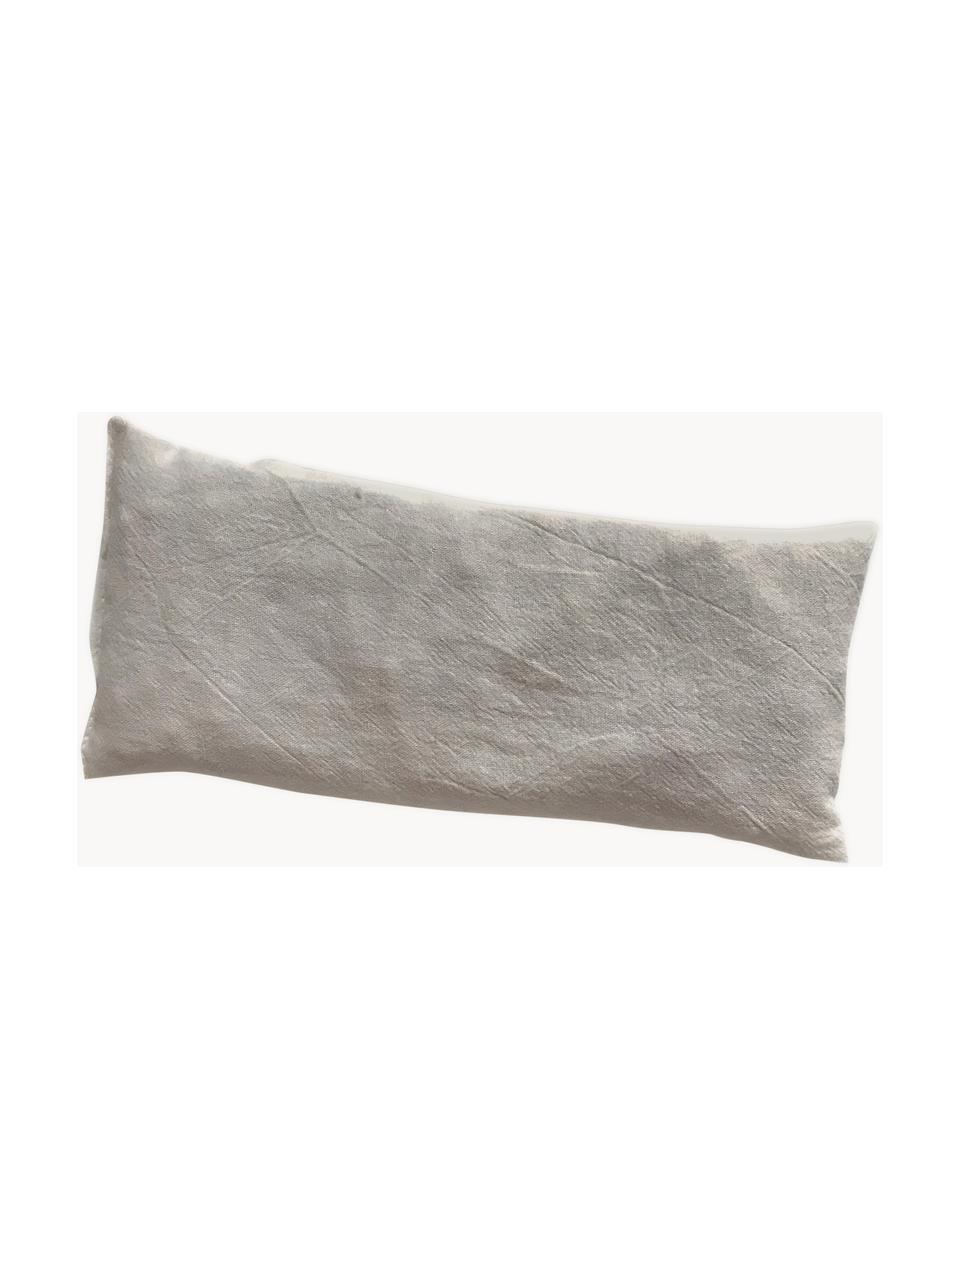 Coussin peluche artisanal Kitten, Polyester, Blanc cassé, larg. 31 x long. 33 cm (taille M)